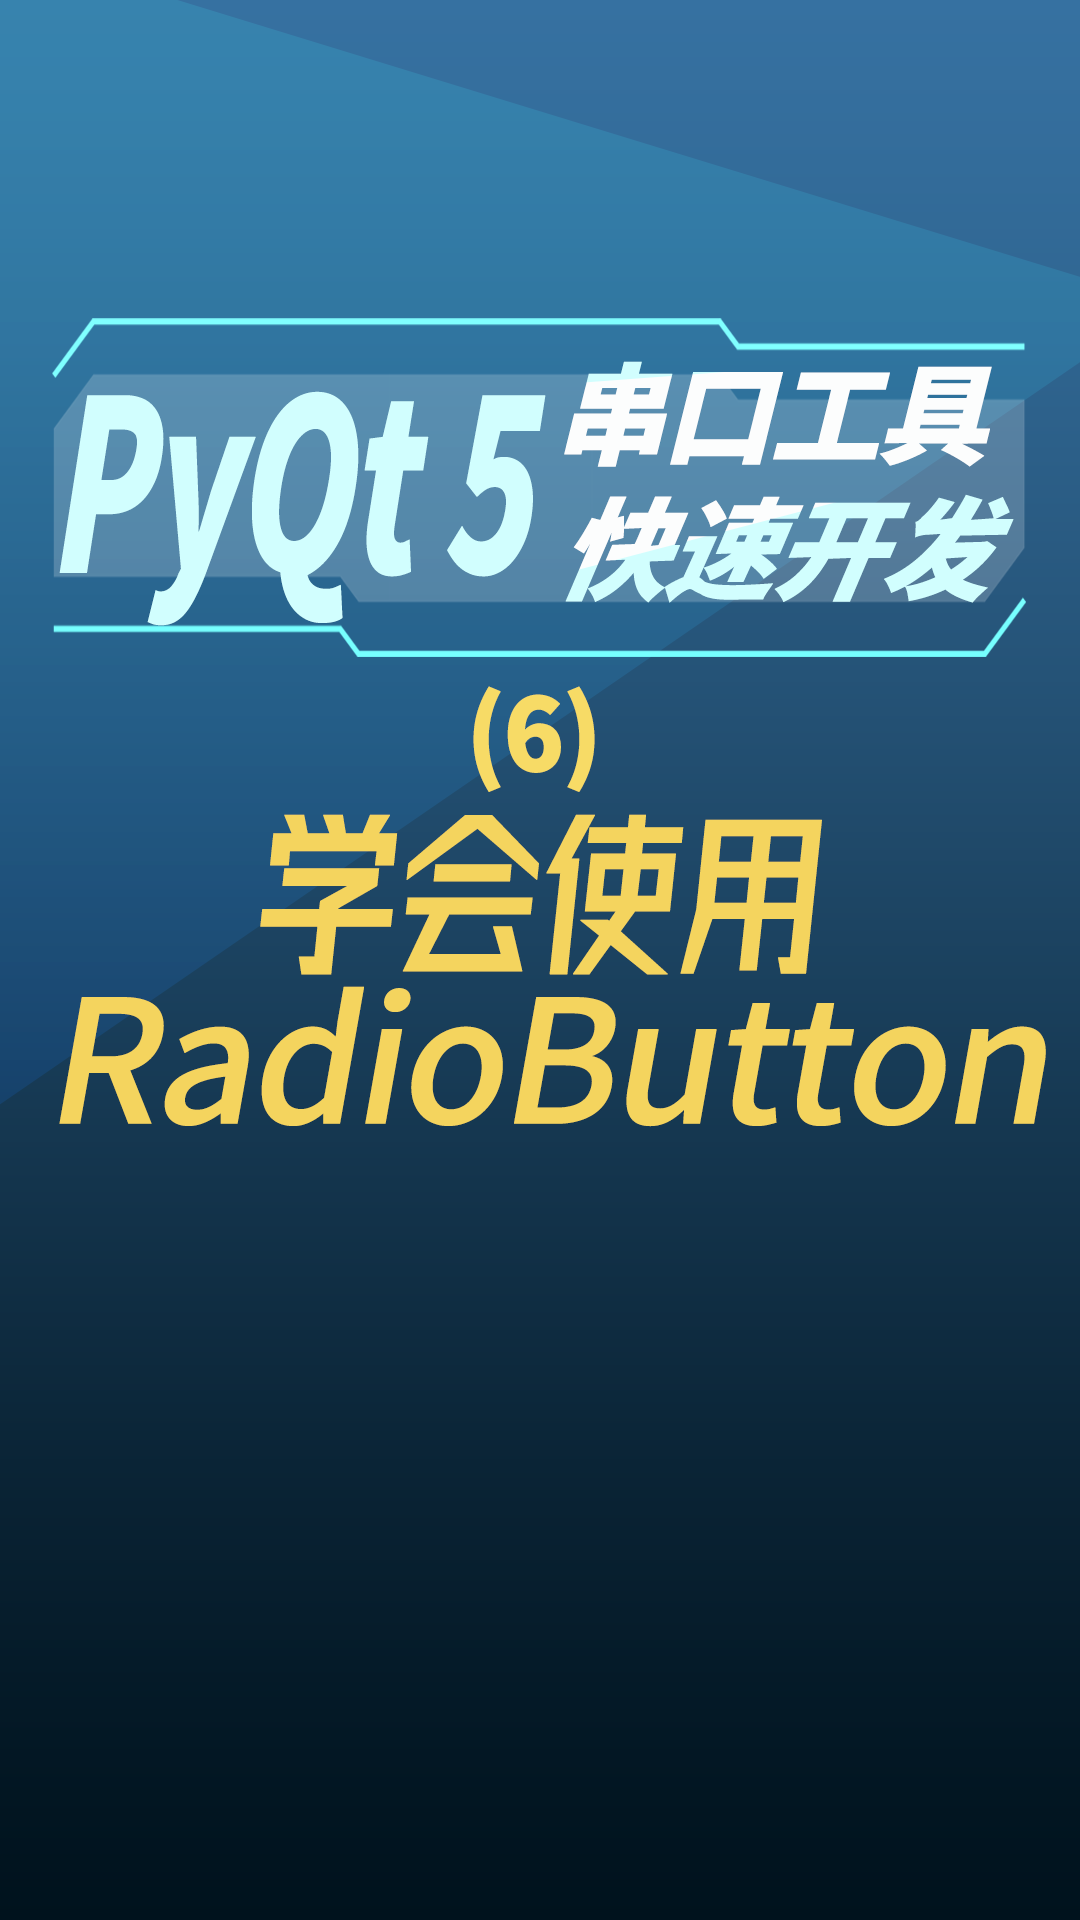 pyqt5串口工具快速开发6-学会 使用RadioButton#串口工具开发 